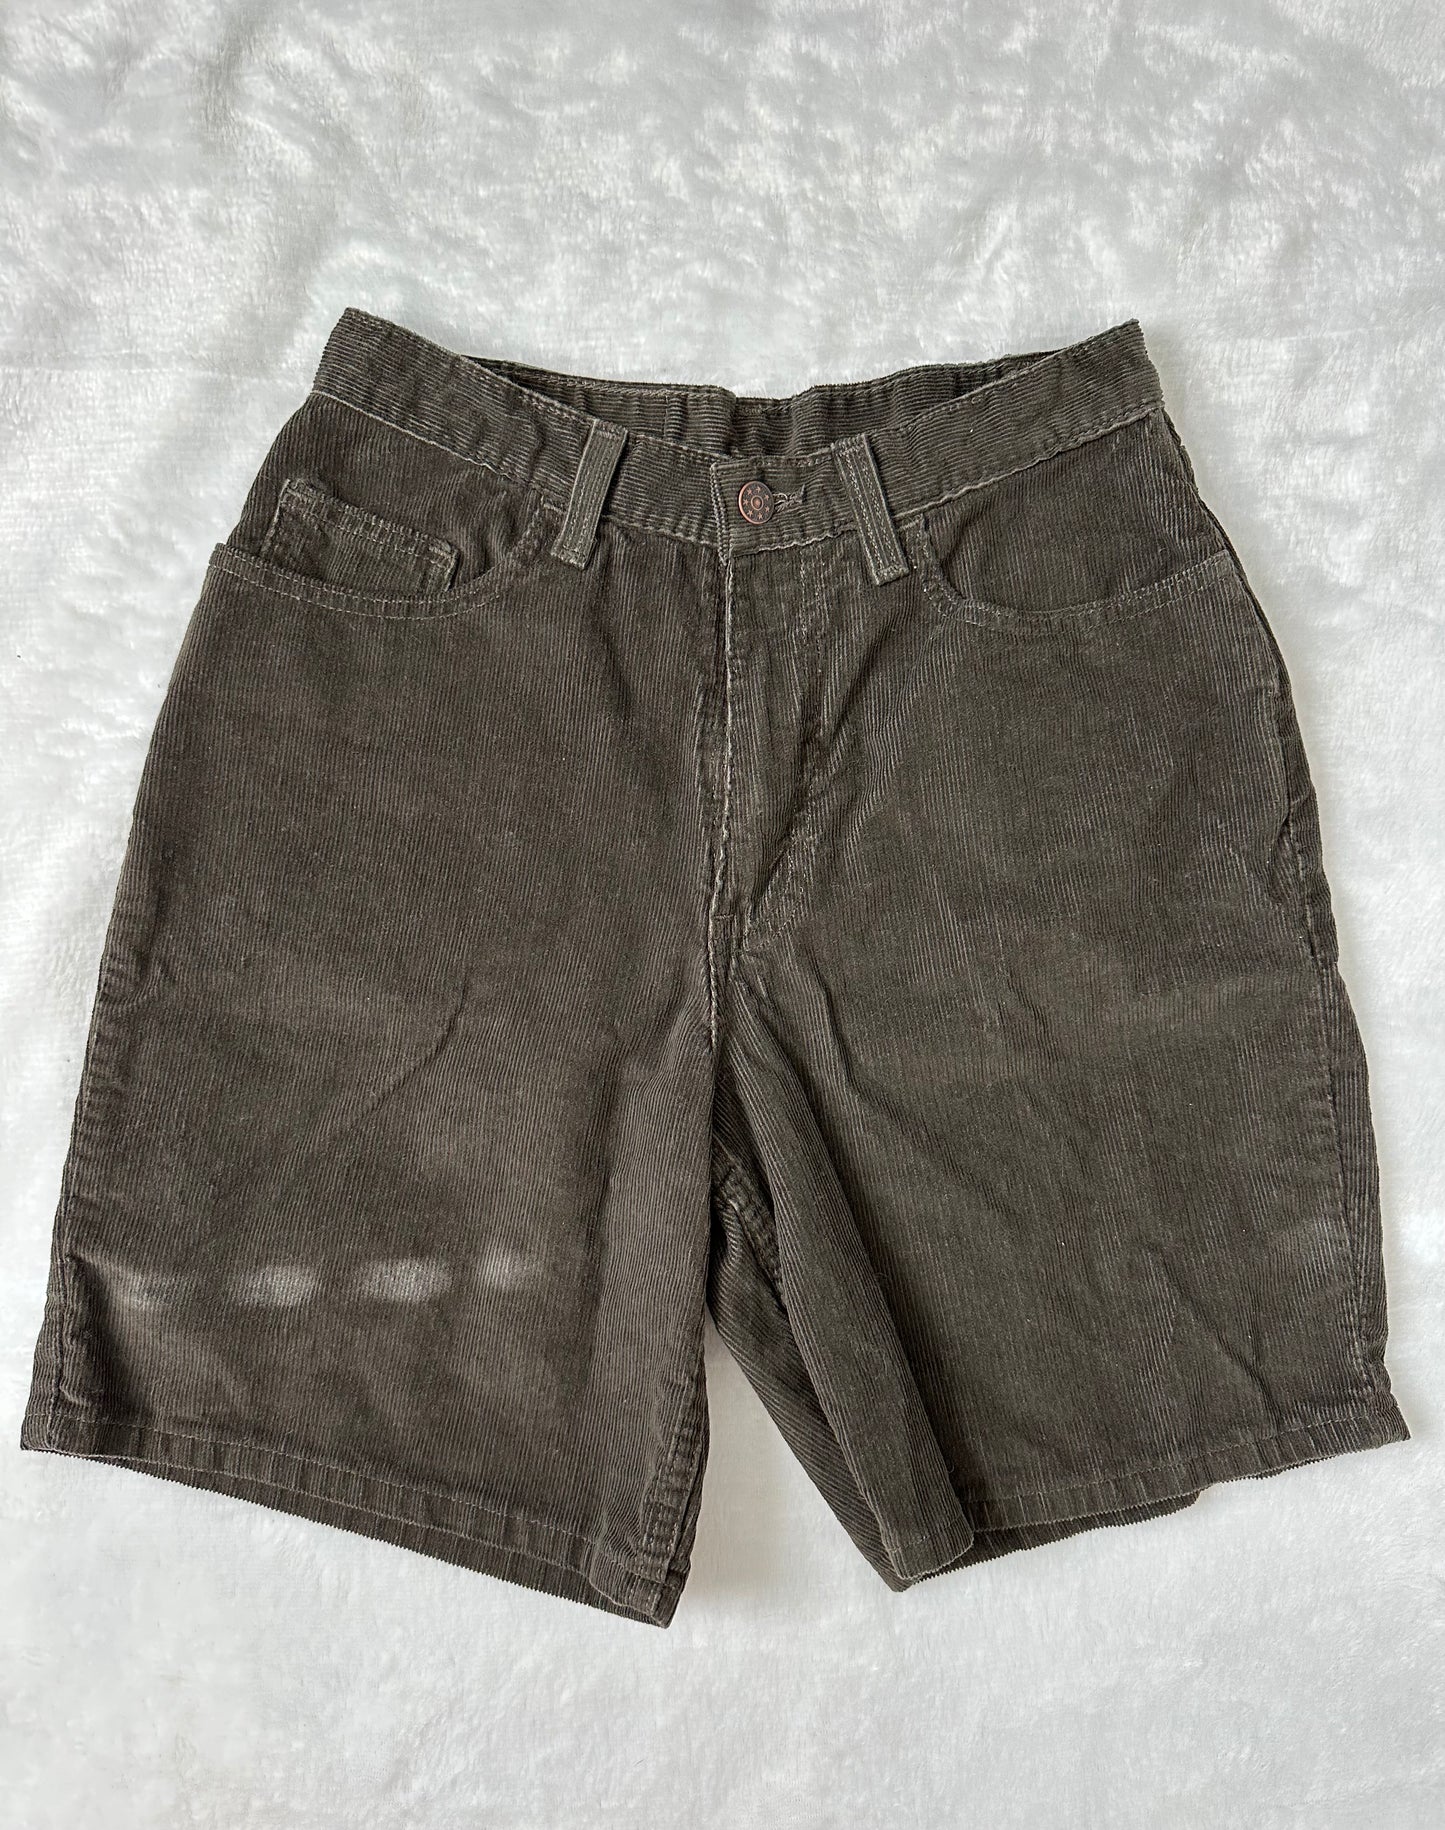 Vintage Corduroy Shorts